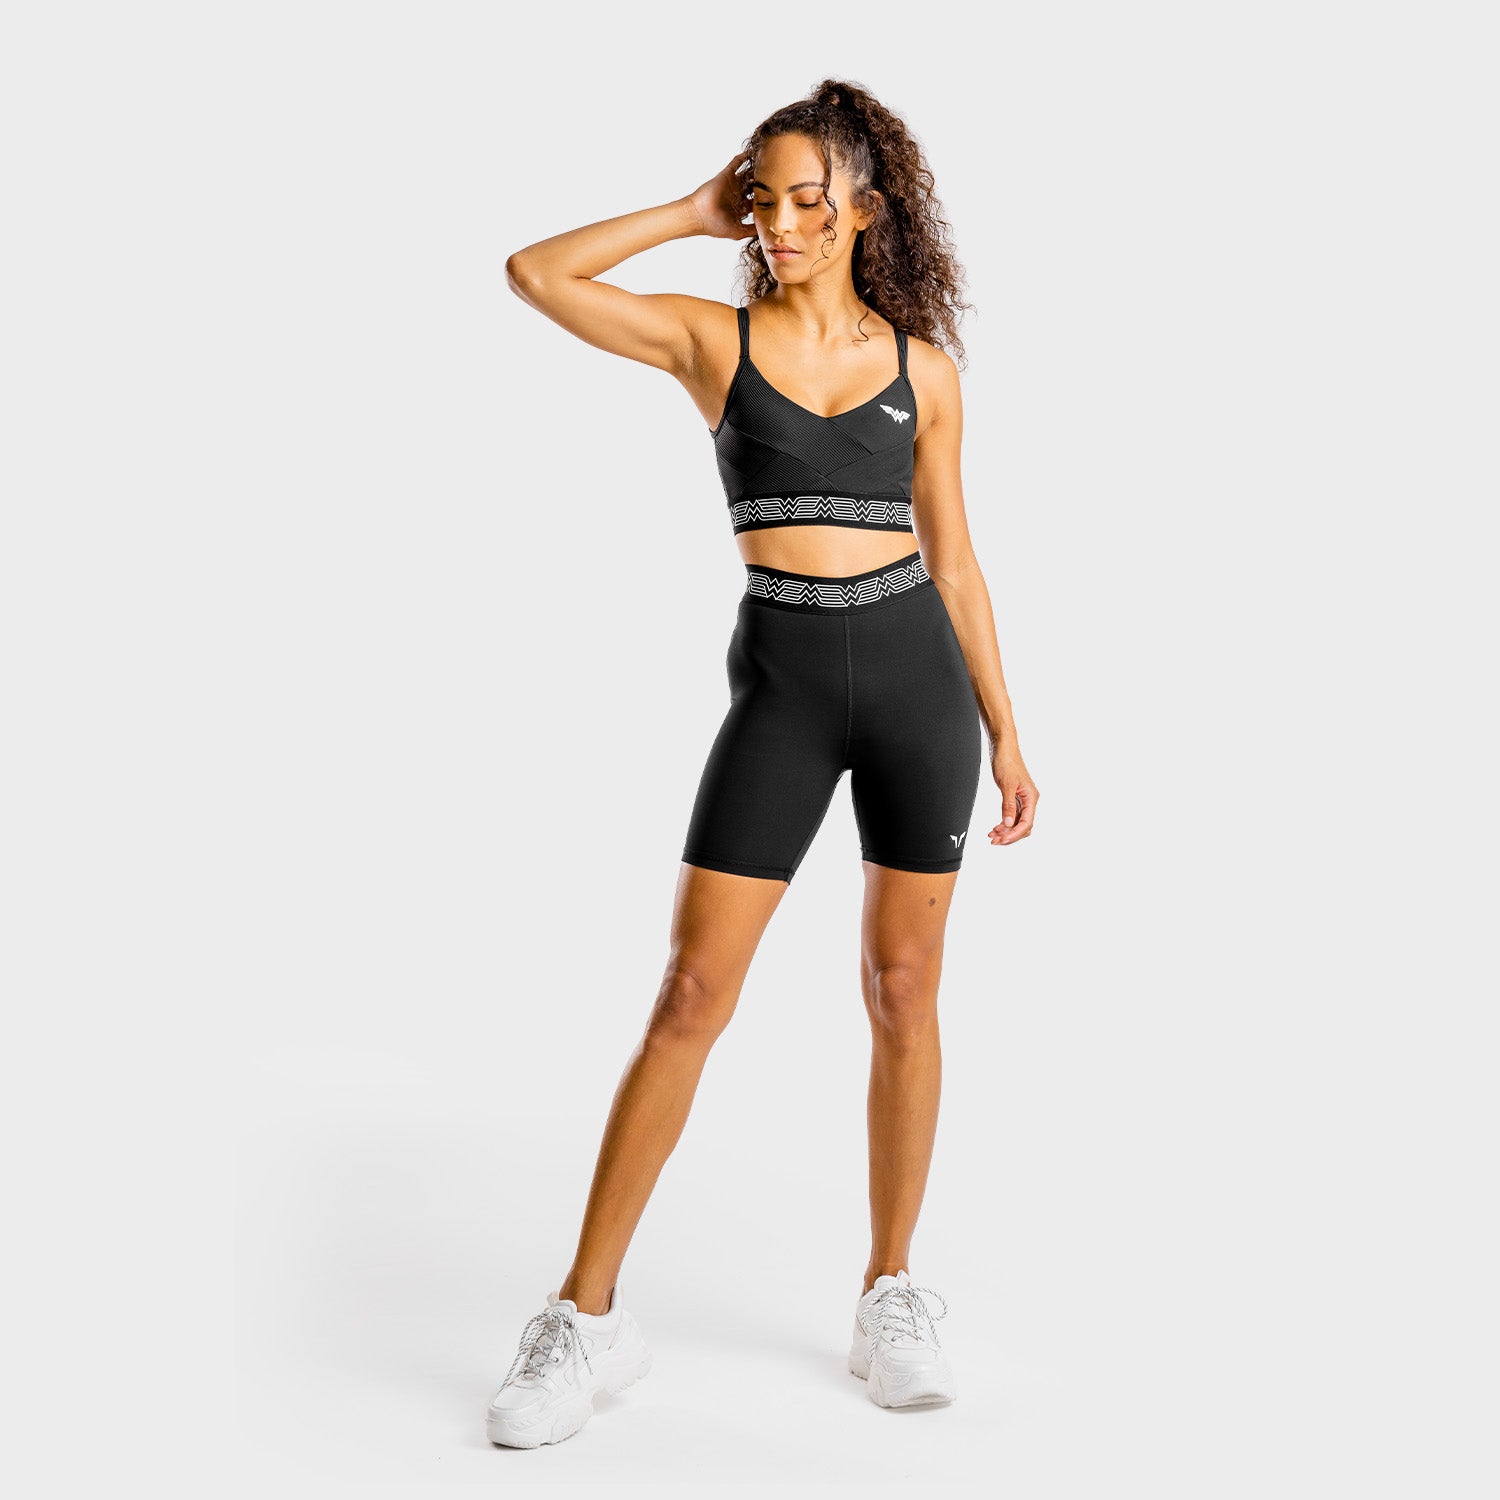 squatwolf-sports-bra-for-gym-wonder-woman-sports-bra-black-workout-clothes